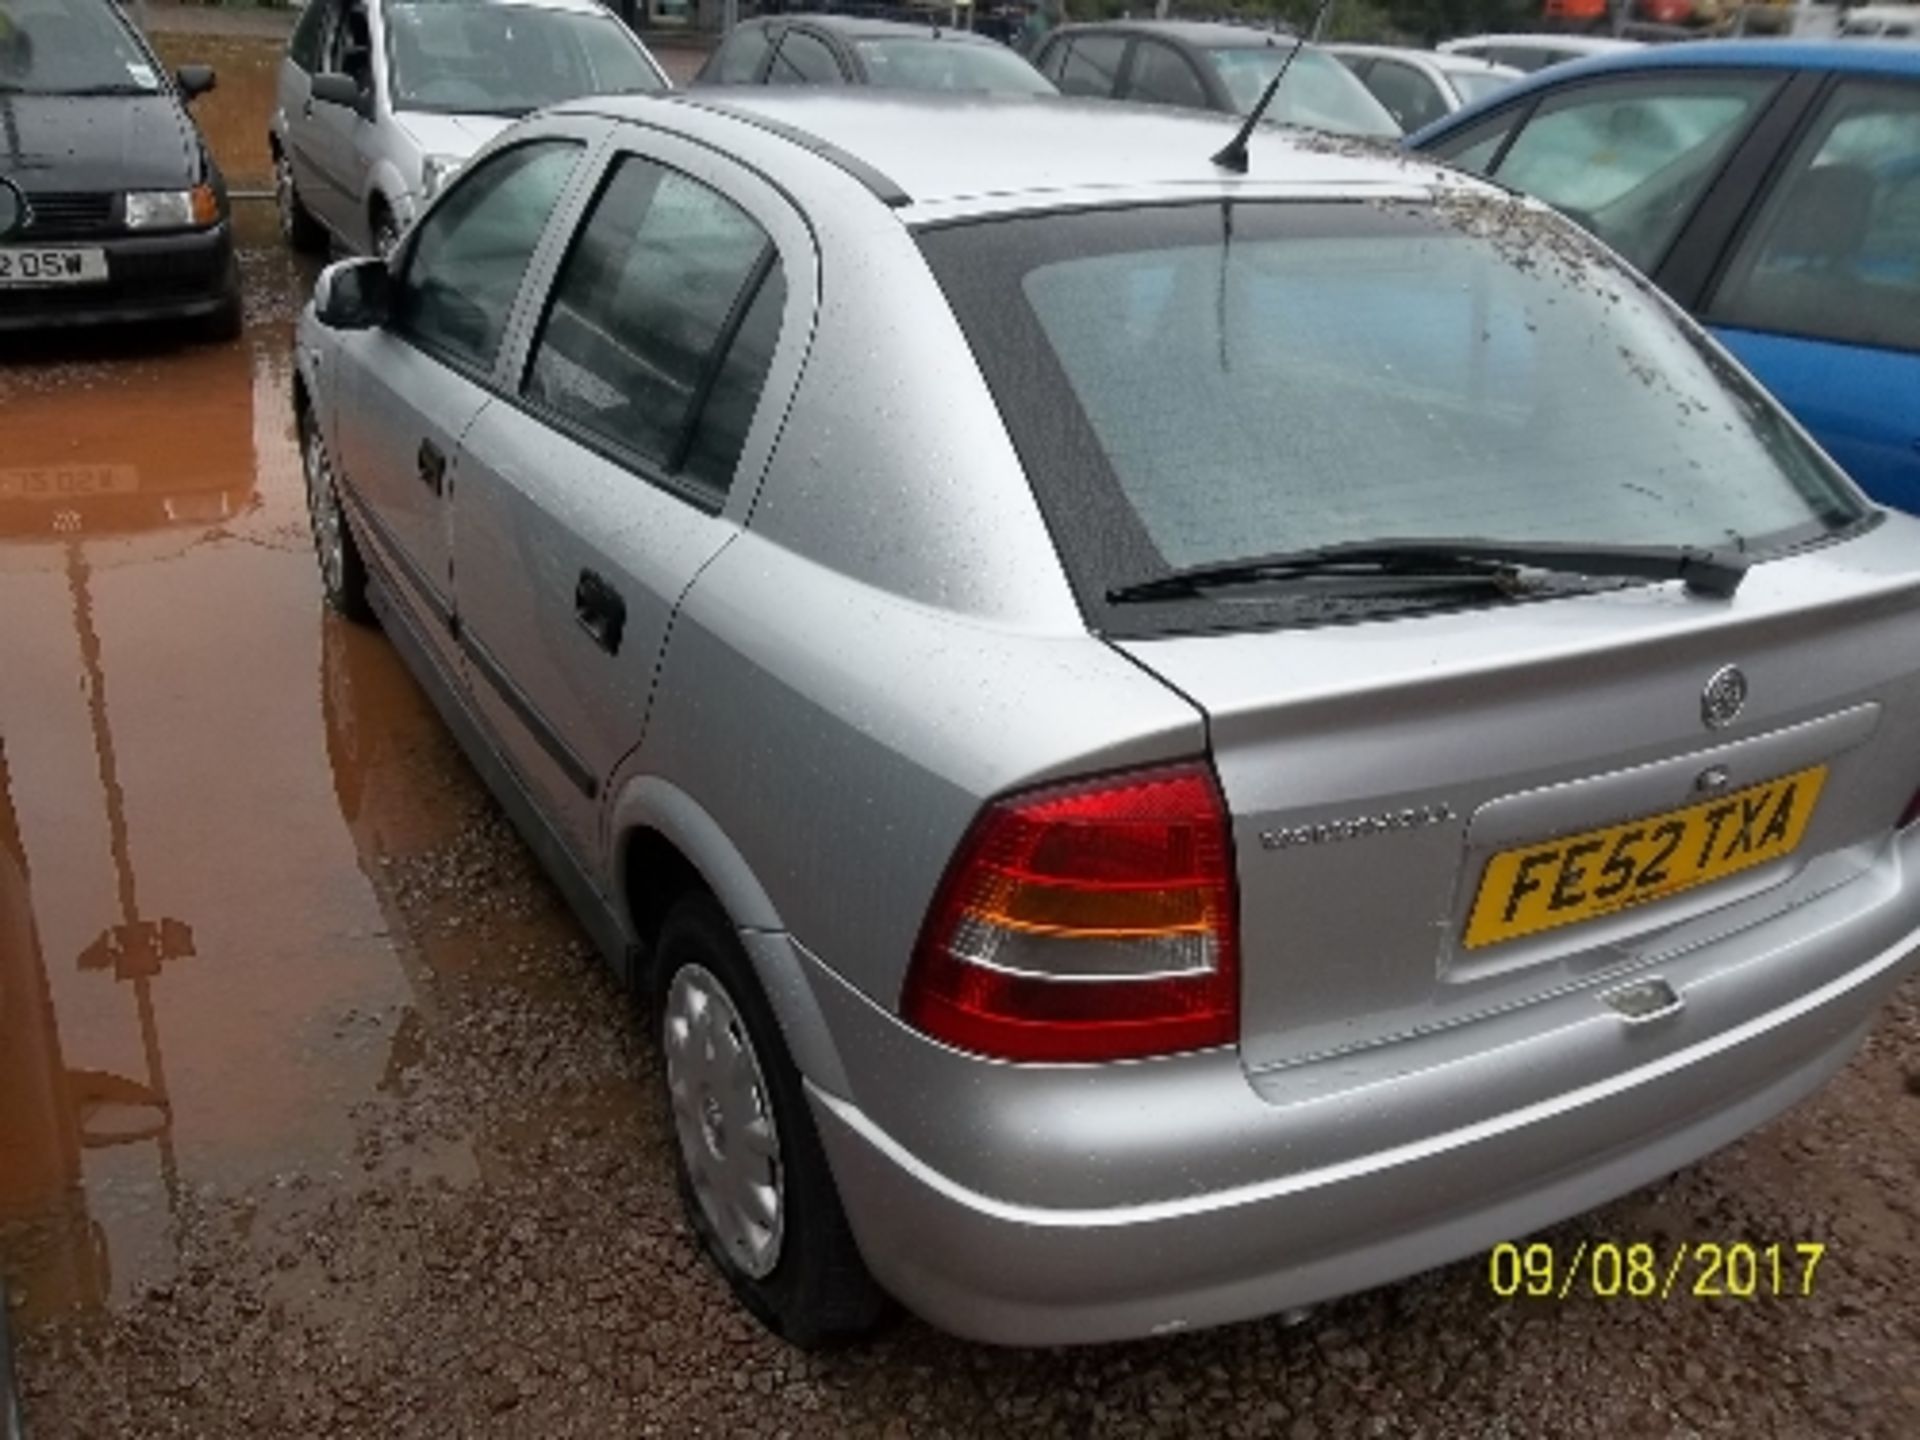 Vauxhall Astra Envoy 8V - FE52 TXA Date of registration: 01.11.2002 1598cc, petrol, 4 speed auto, - Image 4 of 4